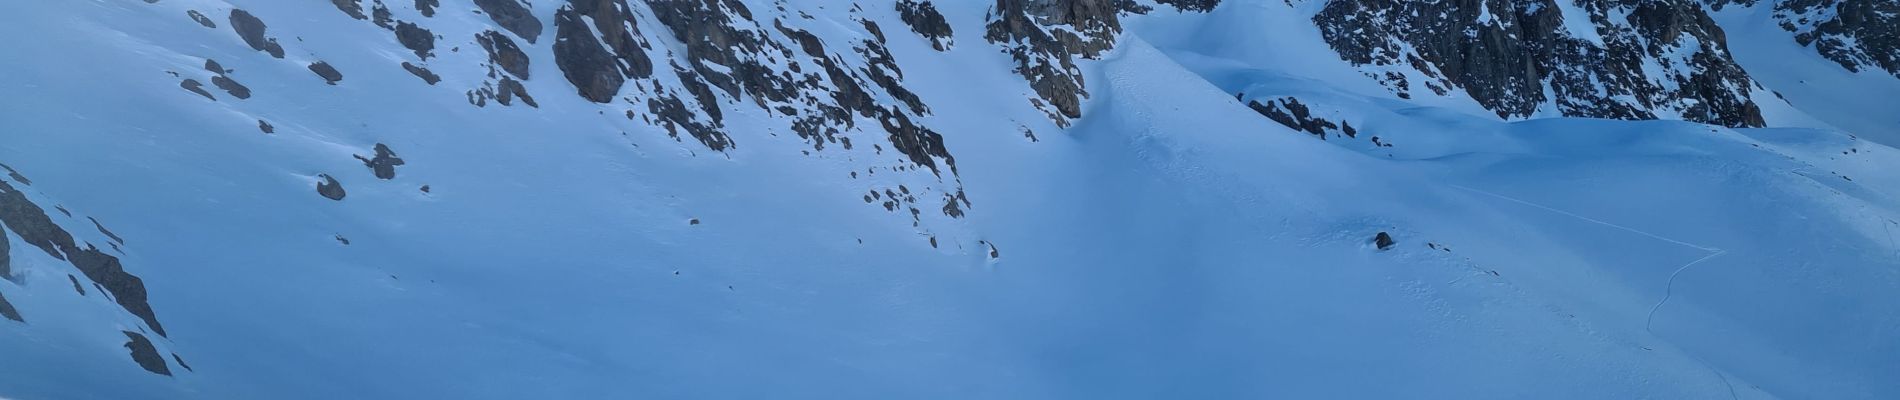 Percorso Sci alpinismo Le Monêtier-les-Bains - pointe de Reou d arsine - Photo